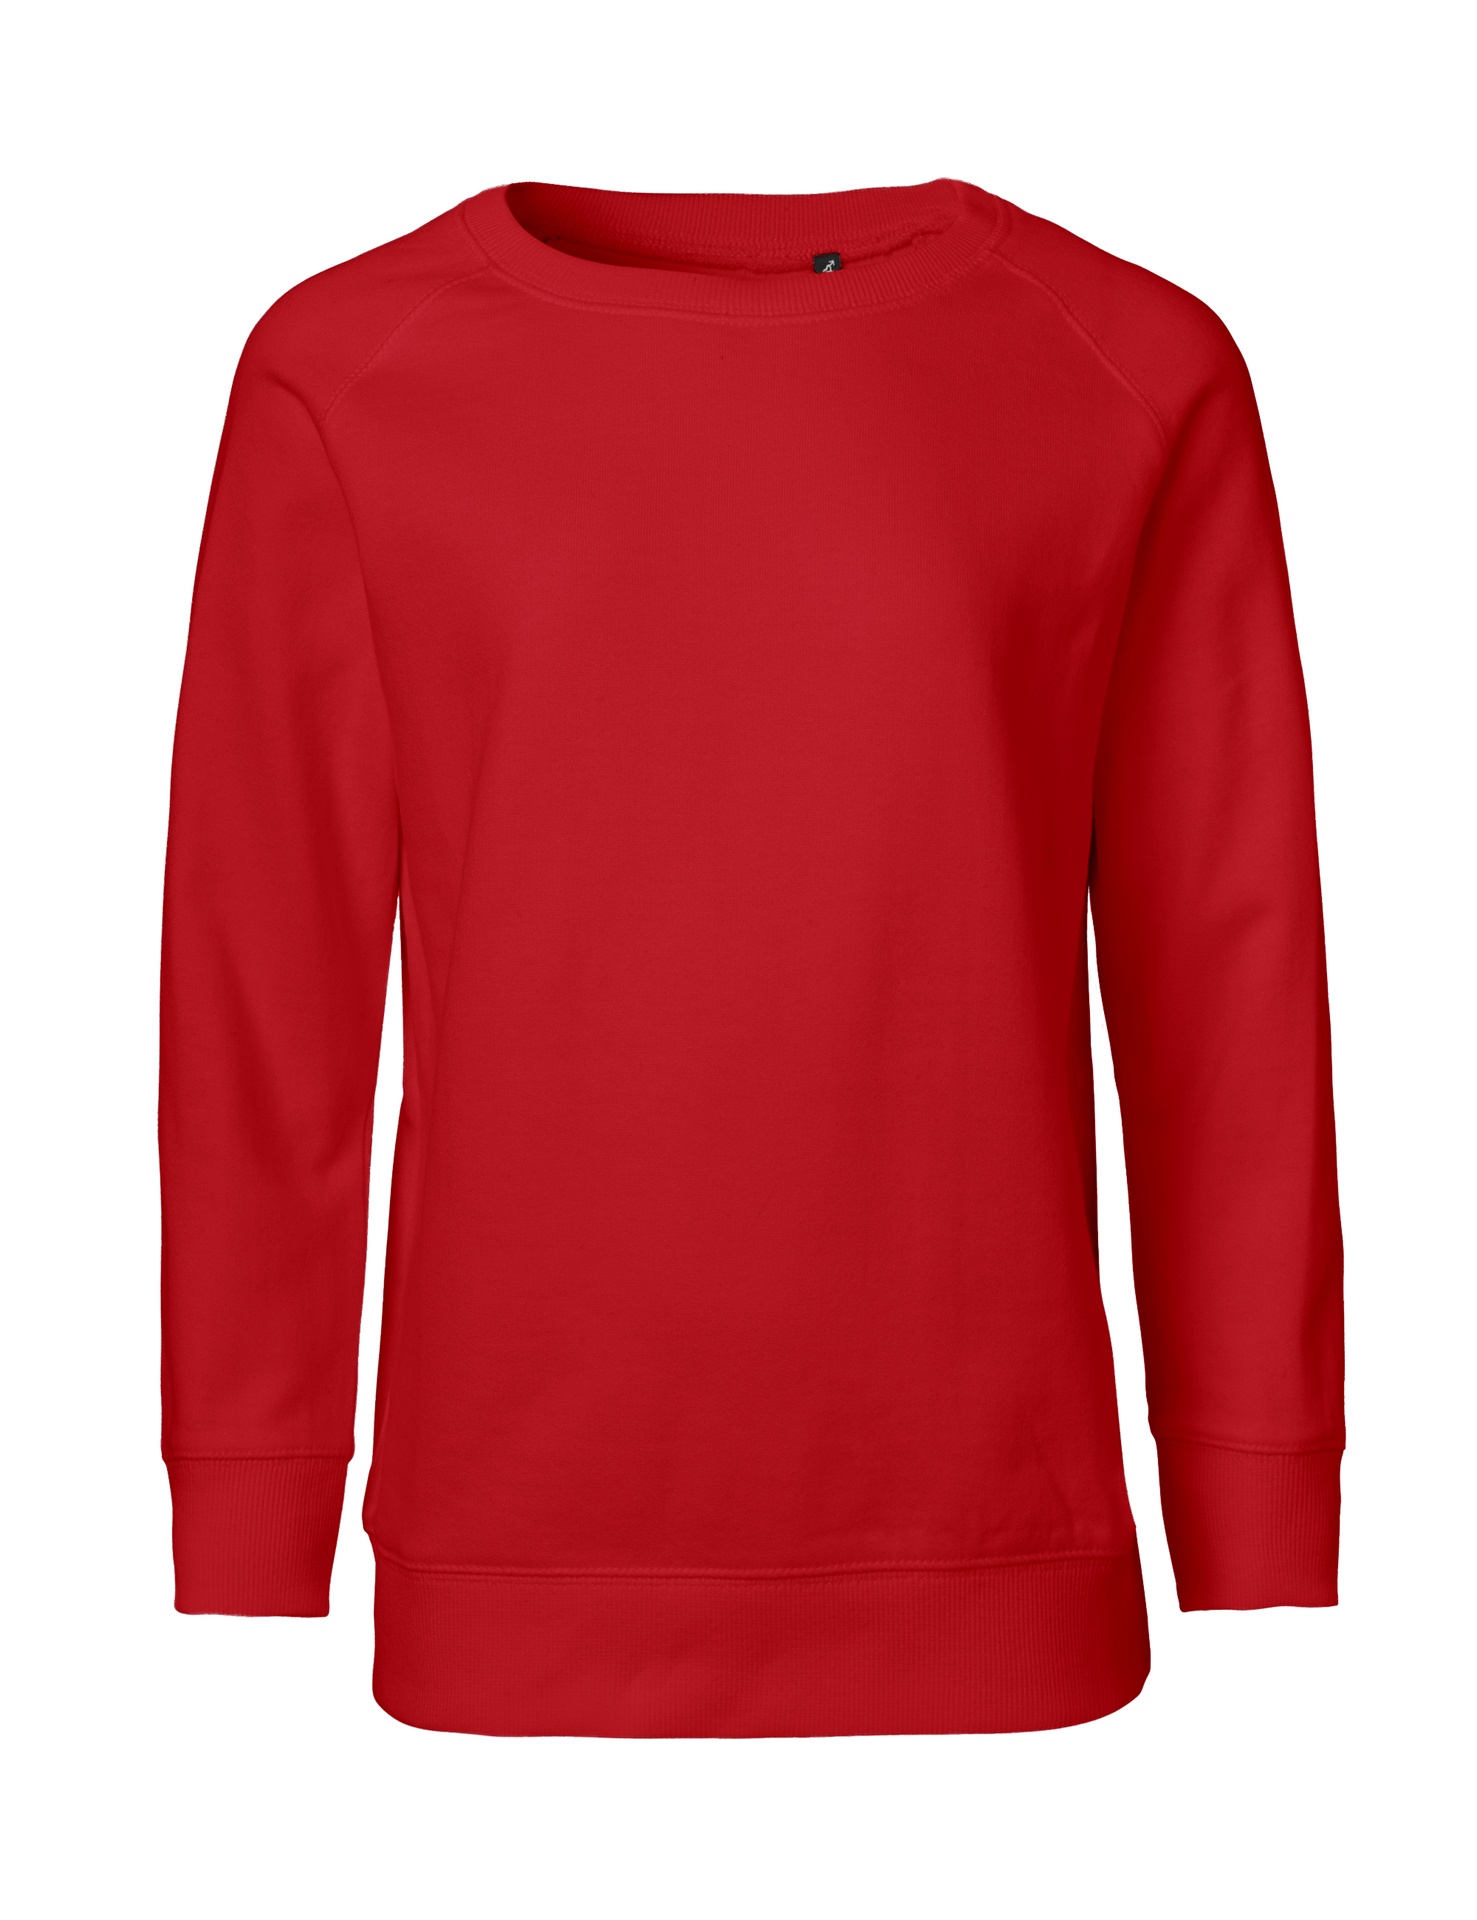 [PR/05537] Kids Sweatshirt (Red 05, 128/134 cm)